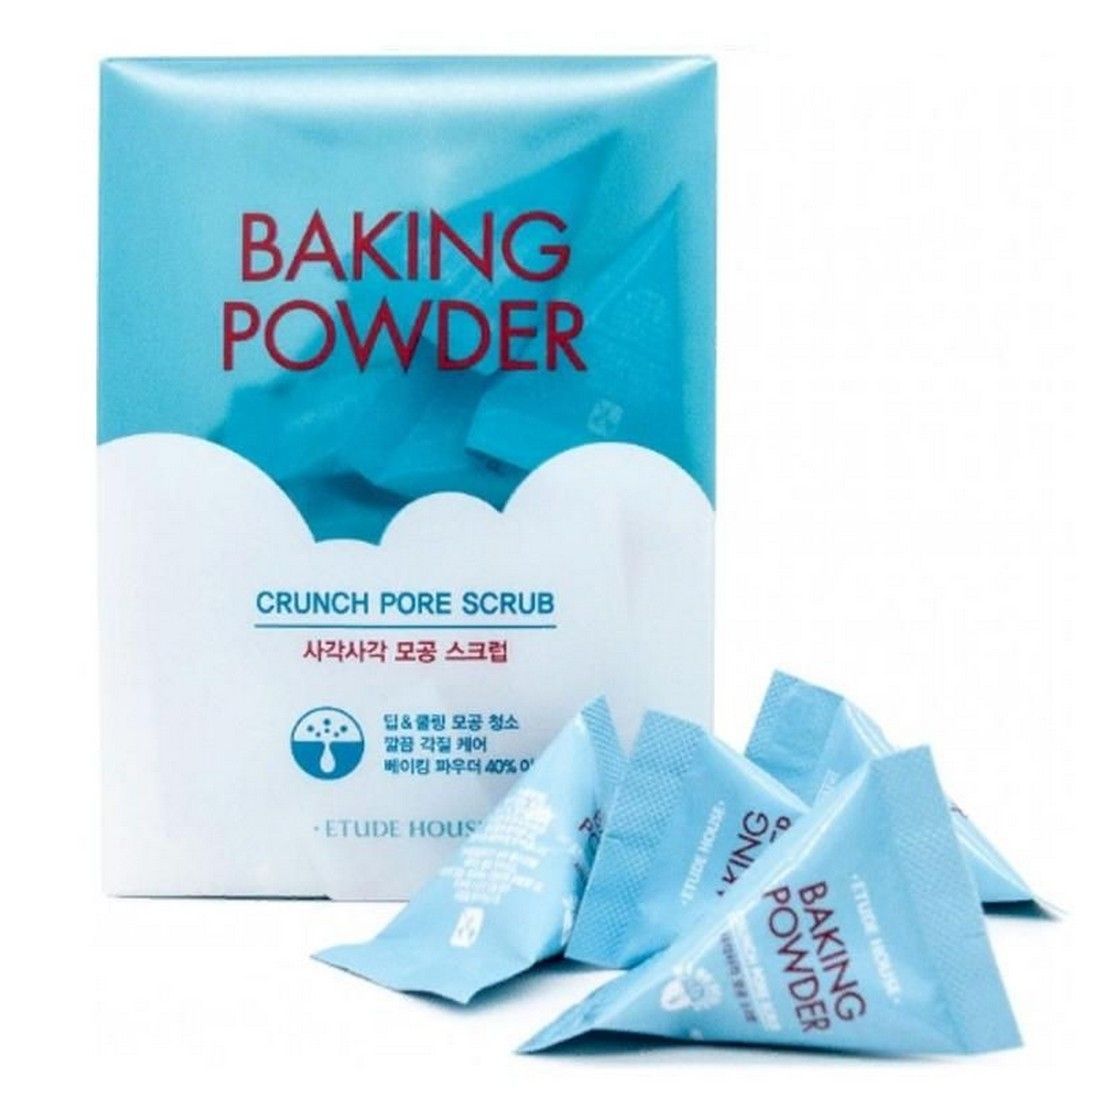 Baking powder скраб применение